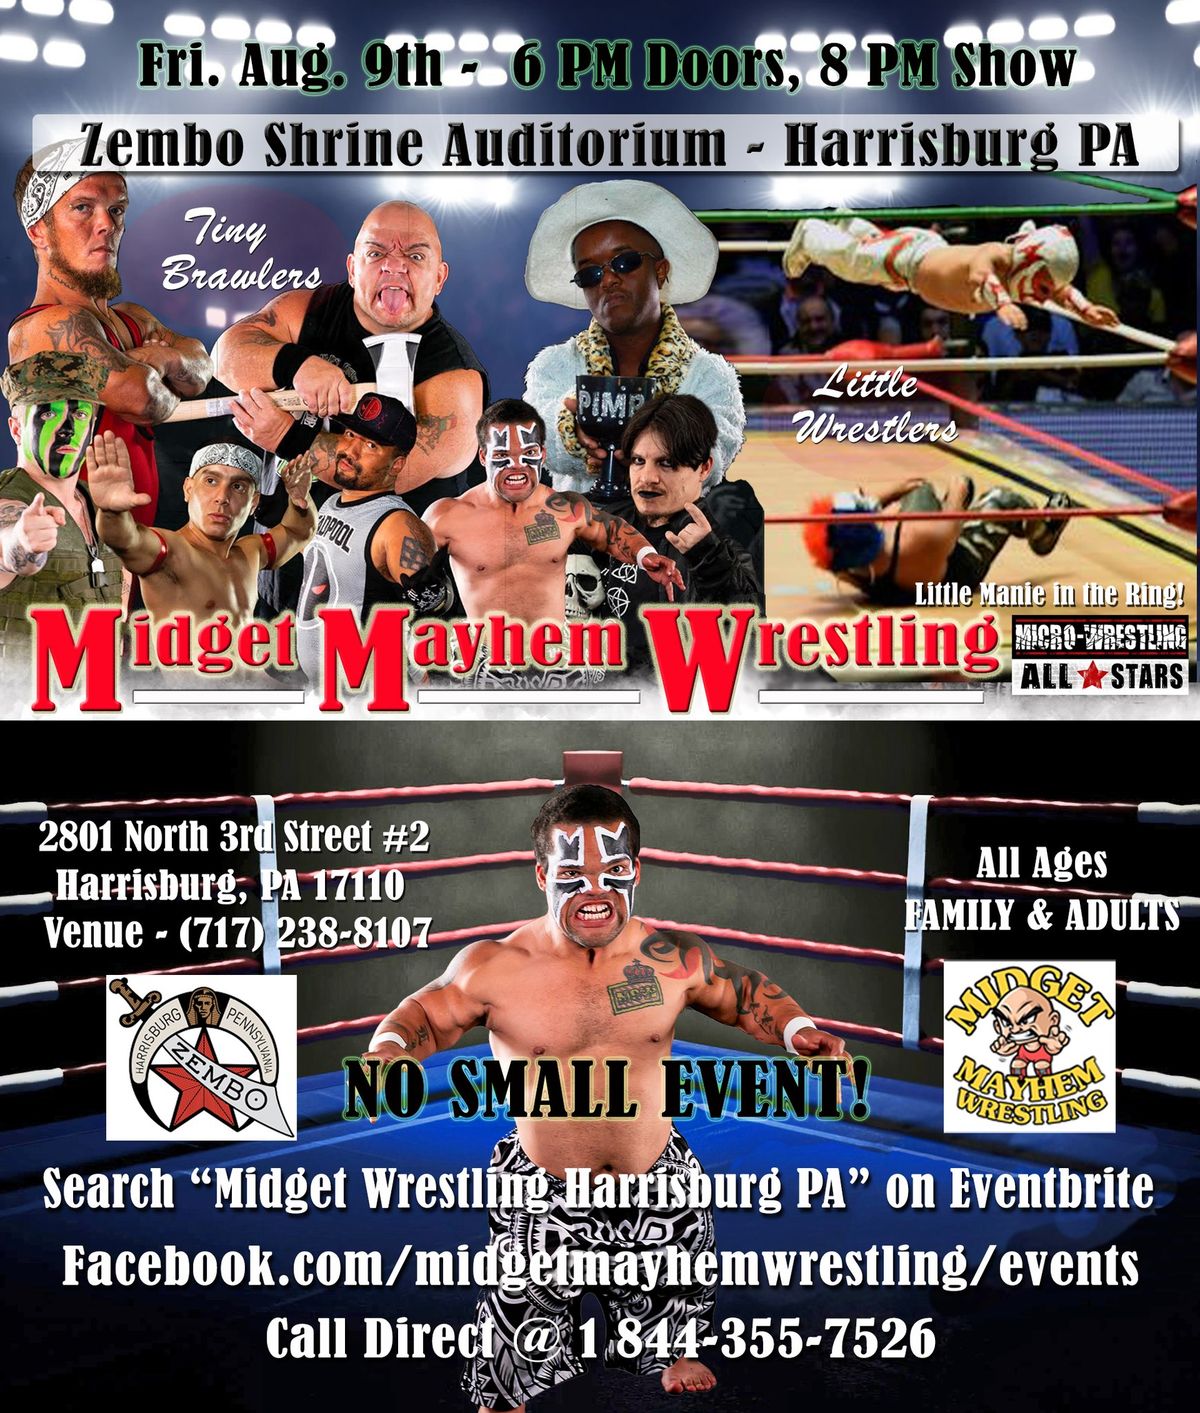 Midget Mayhem Little Mania Micro-Wrestling Event - Harrisburg PA (All-Ages)